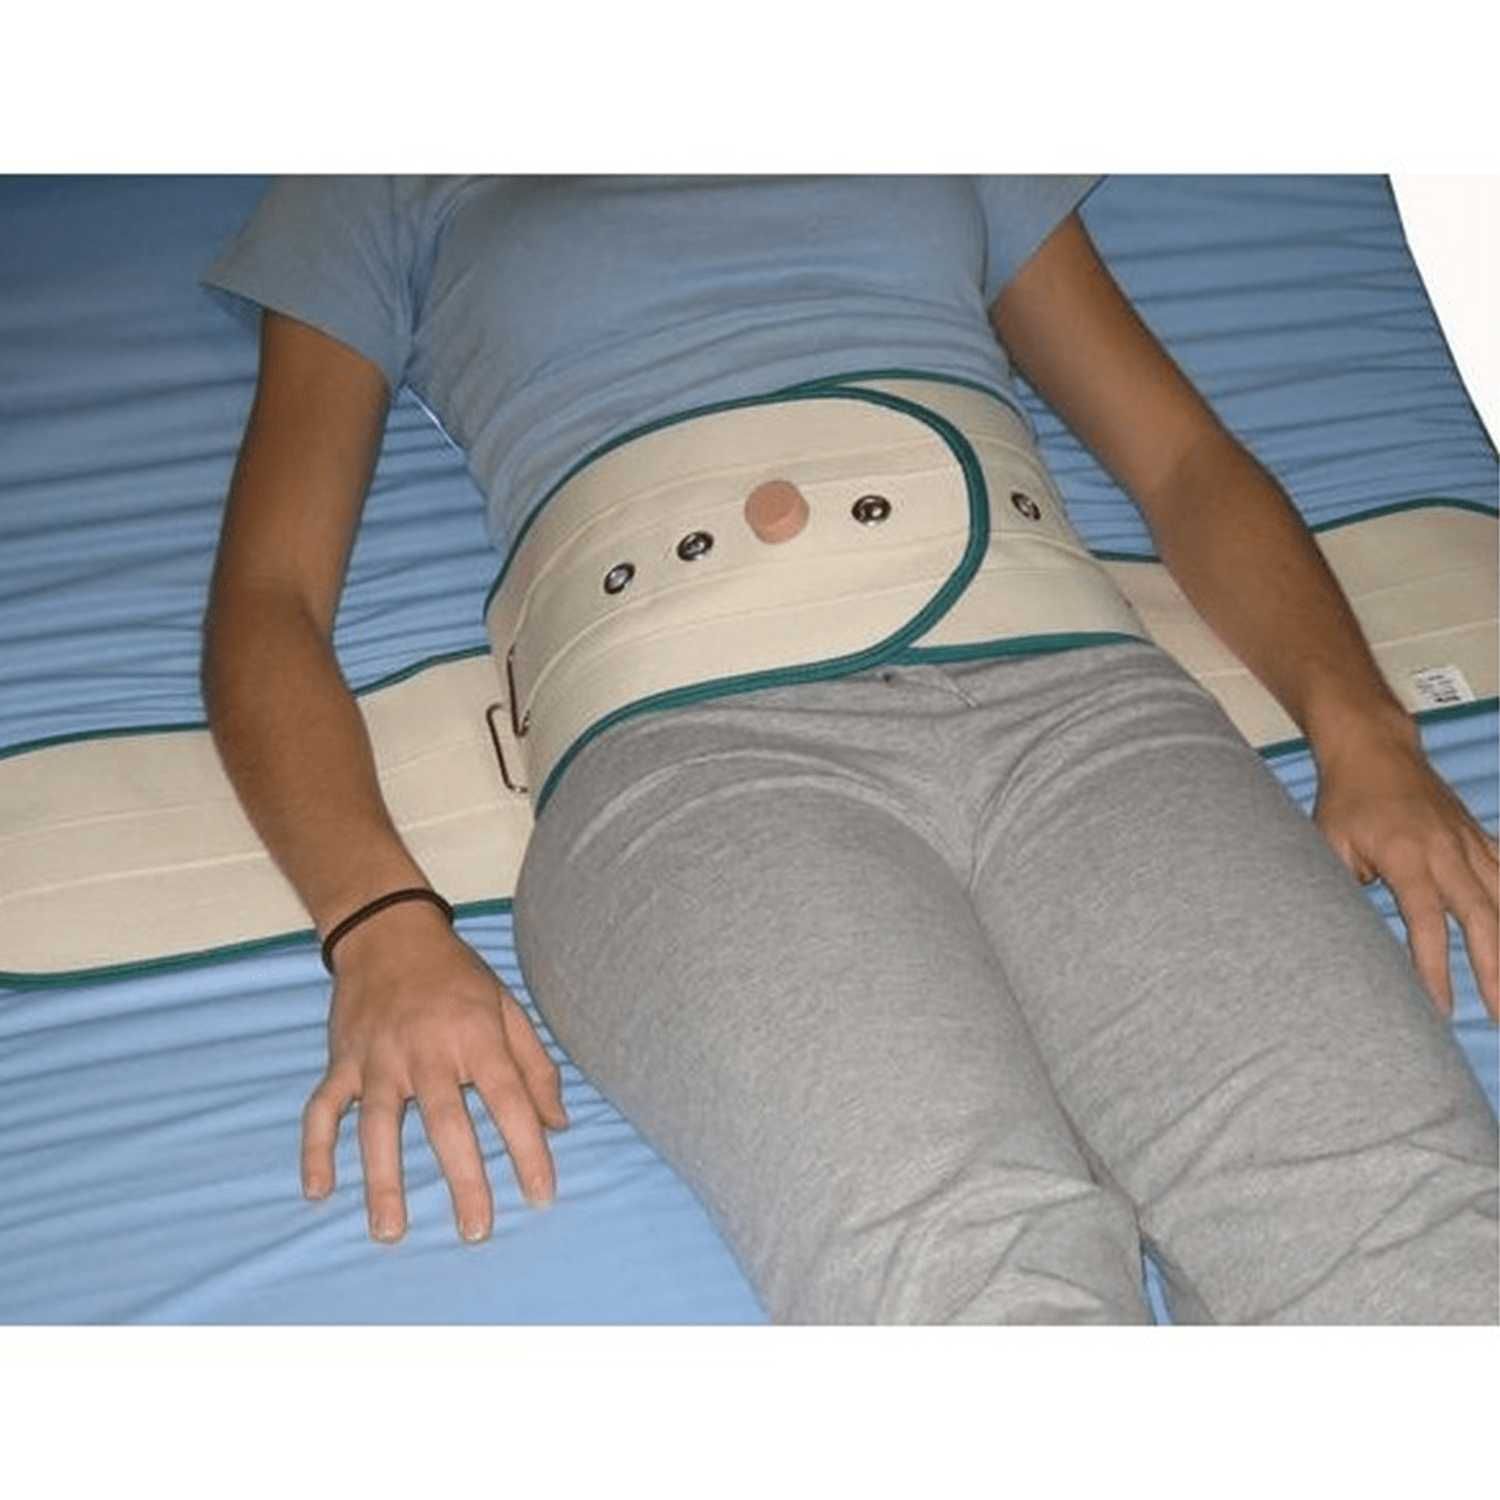 Cinto magnético abdominal para cama NOVO - Envio Gratuito